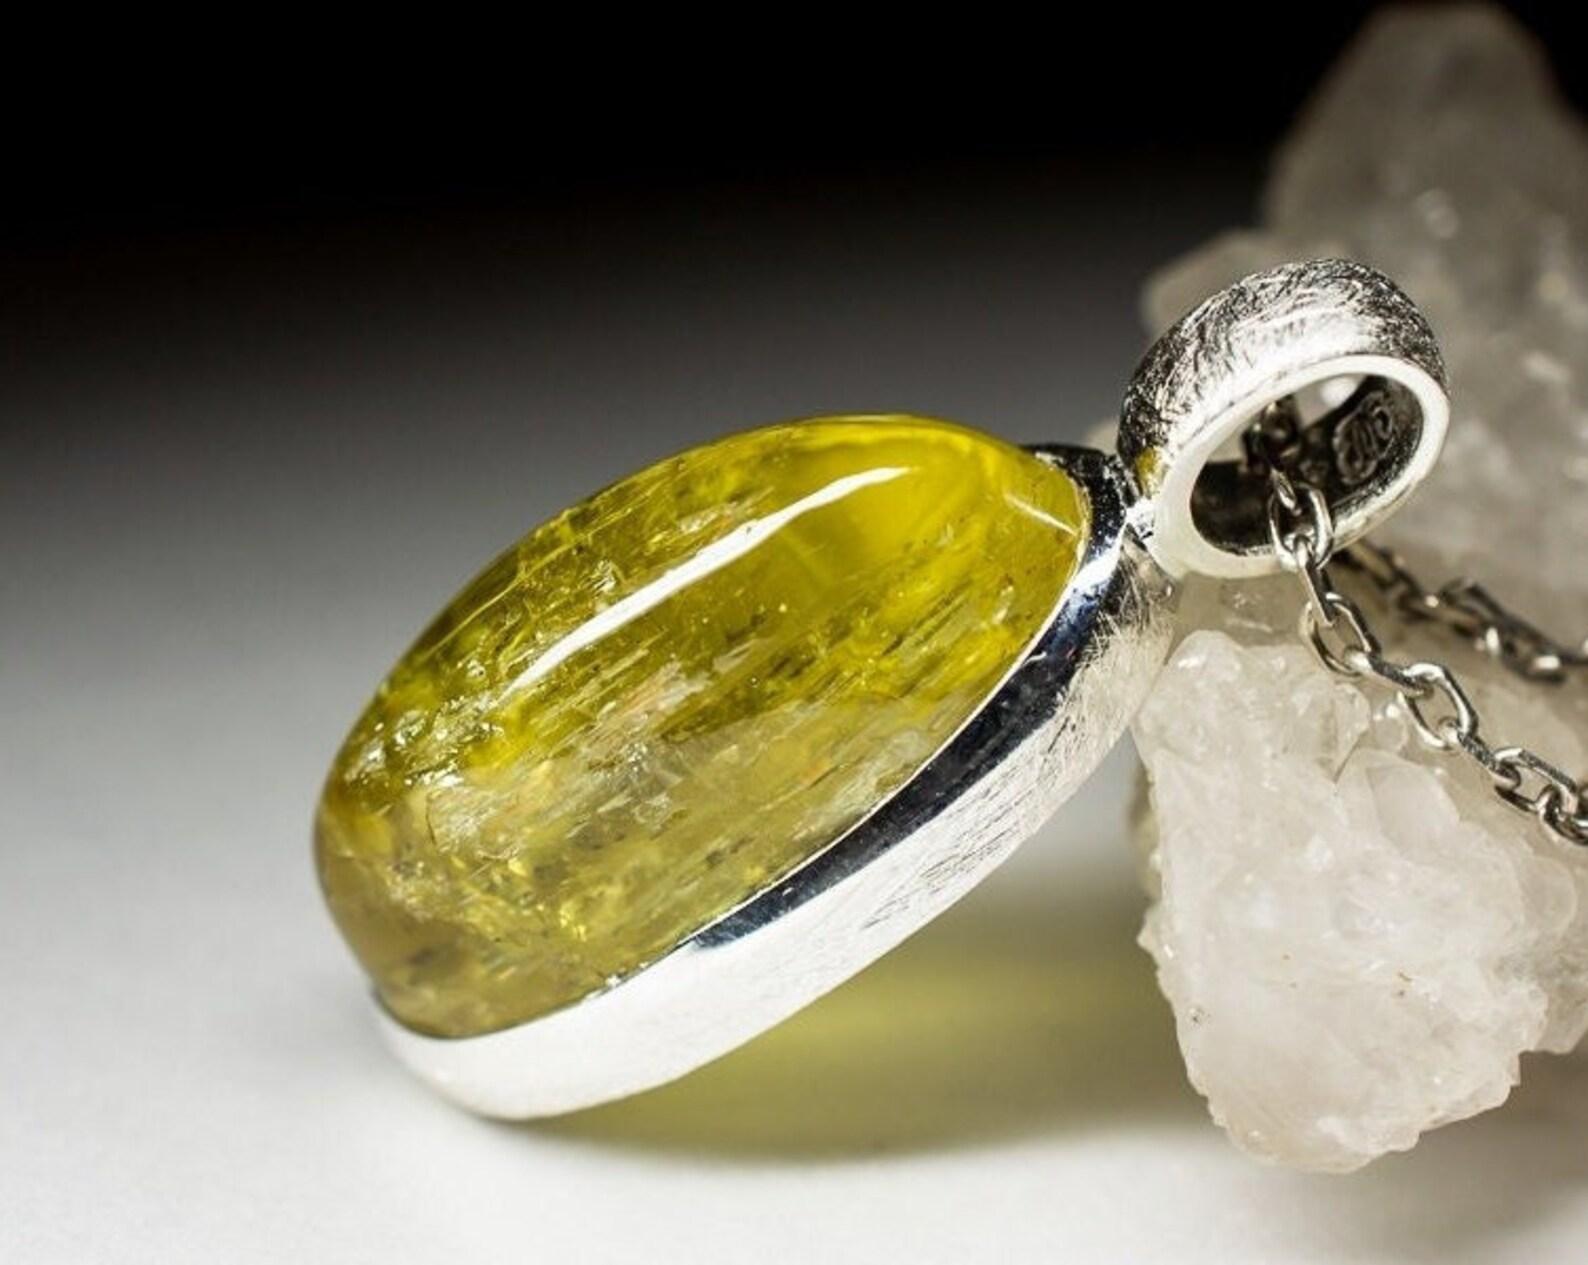 Matte finish silver pendant with natural Heliodor (gold beryl)
stone measurements - 0.39 х 0.43 х 0.83 in / 10 х 11 х 21 mm
stone weight - 19.30 carats
pendant weight - 5.92 grams
pendant height - 1.26 in / 32 mm